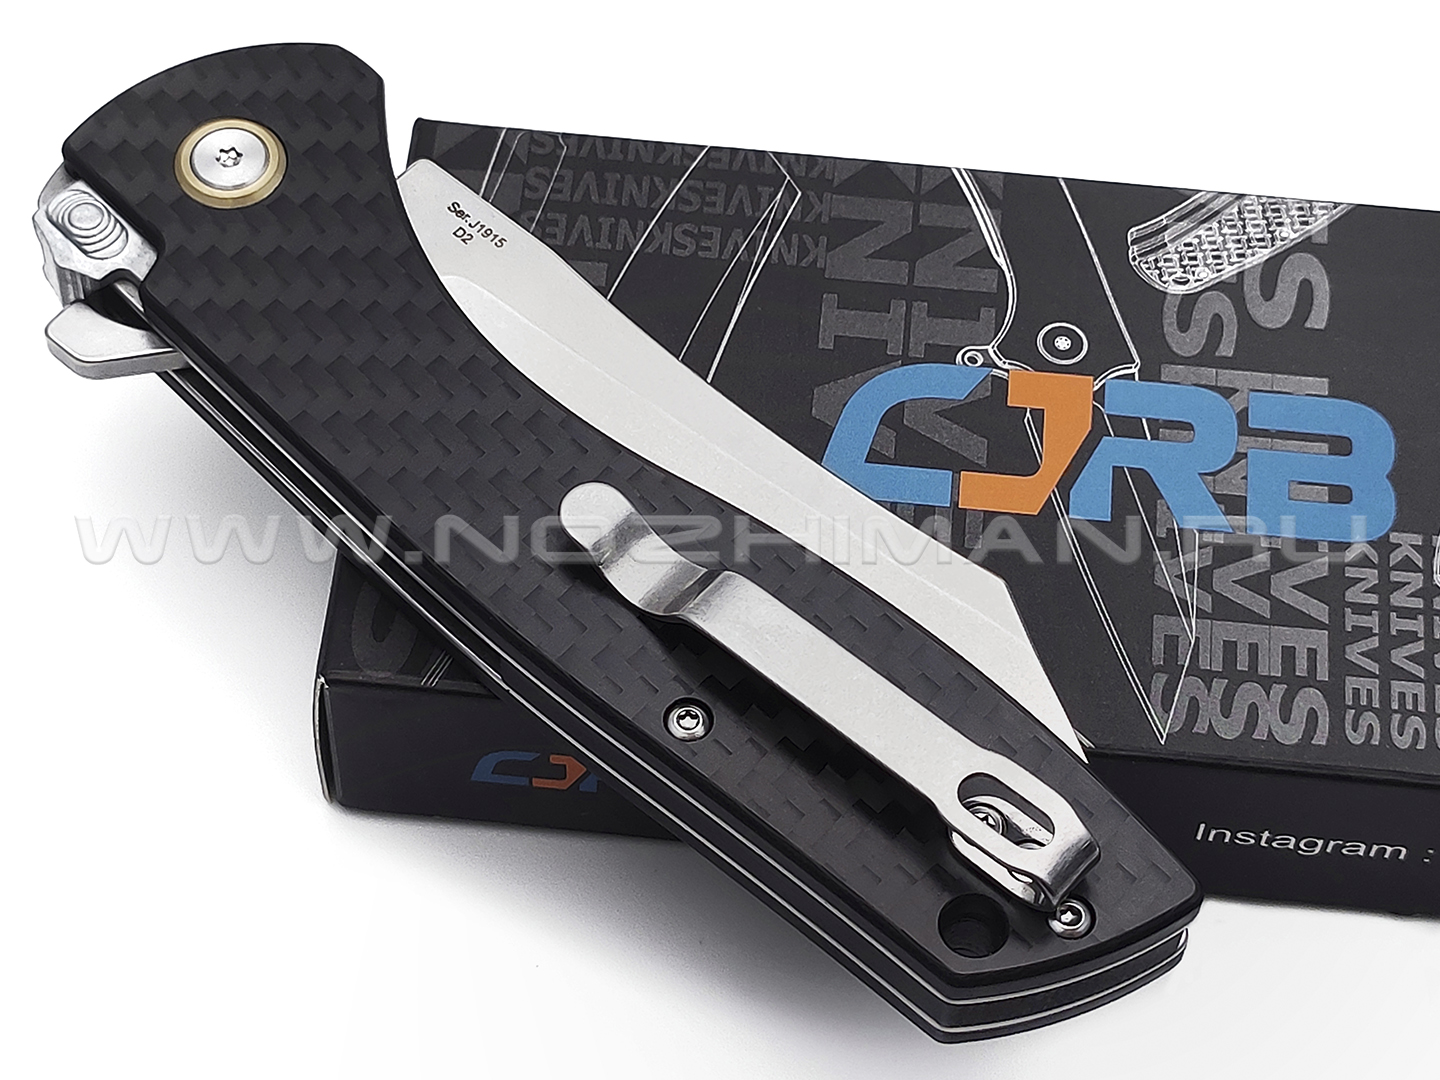 Нож CJRB Kicker J1915-CF сталь D2, рукоять Carbon fiber